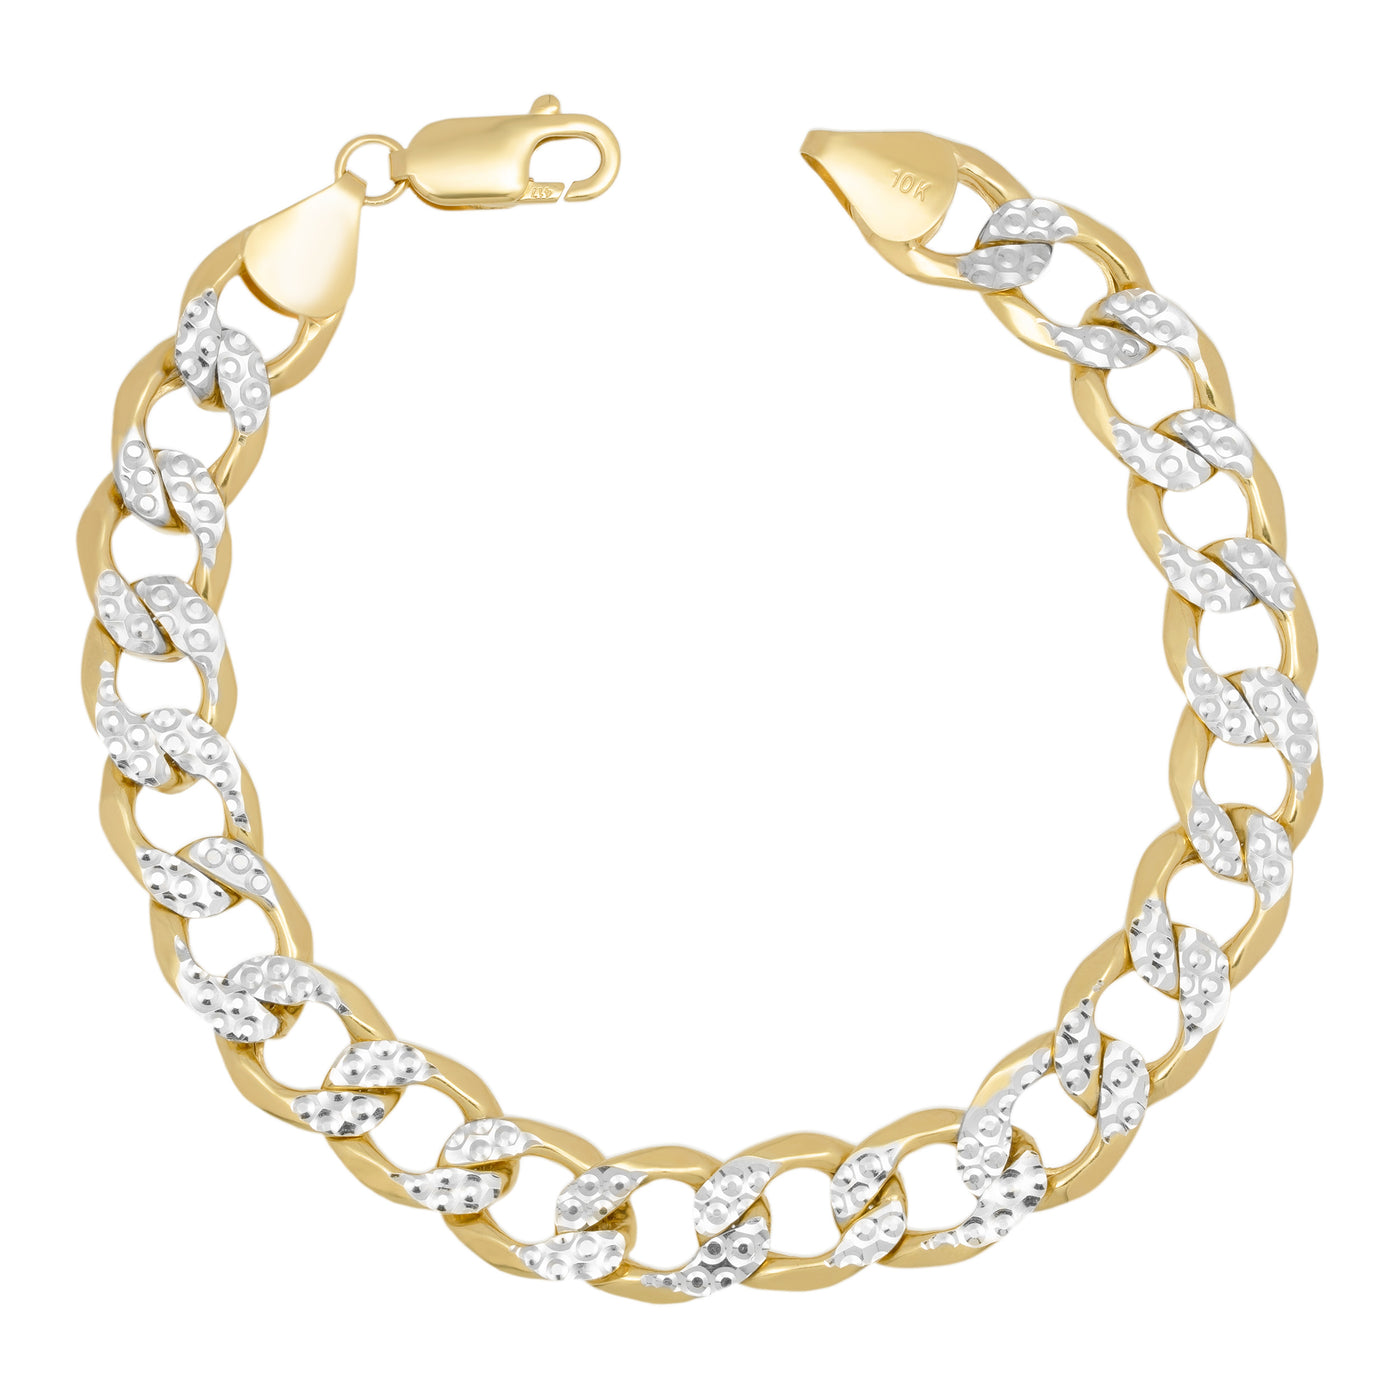 Women's Pave Miami Curb Link Bracelet 10K Yellow White Gold - Hollow